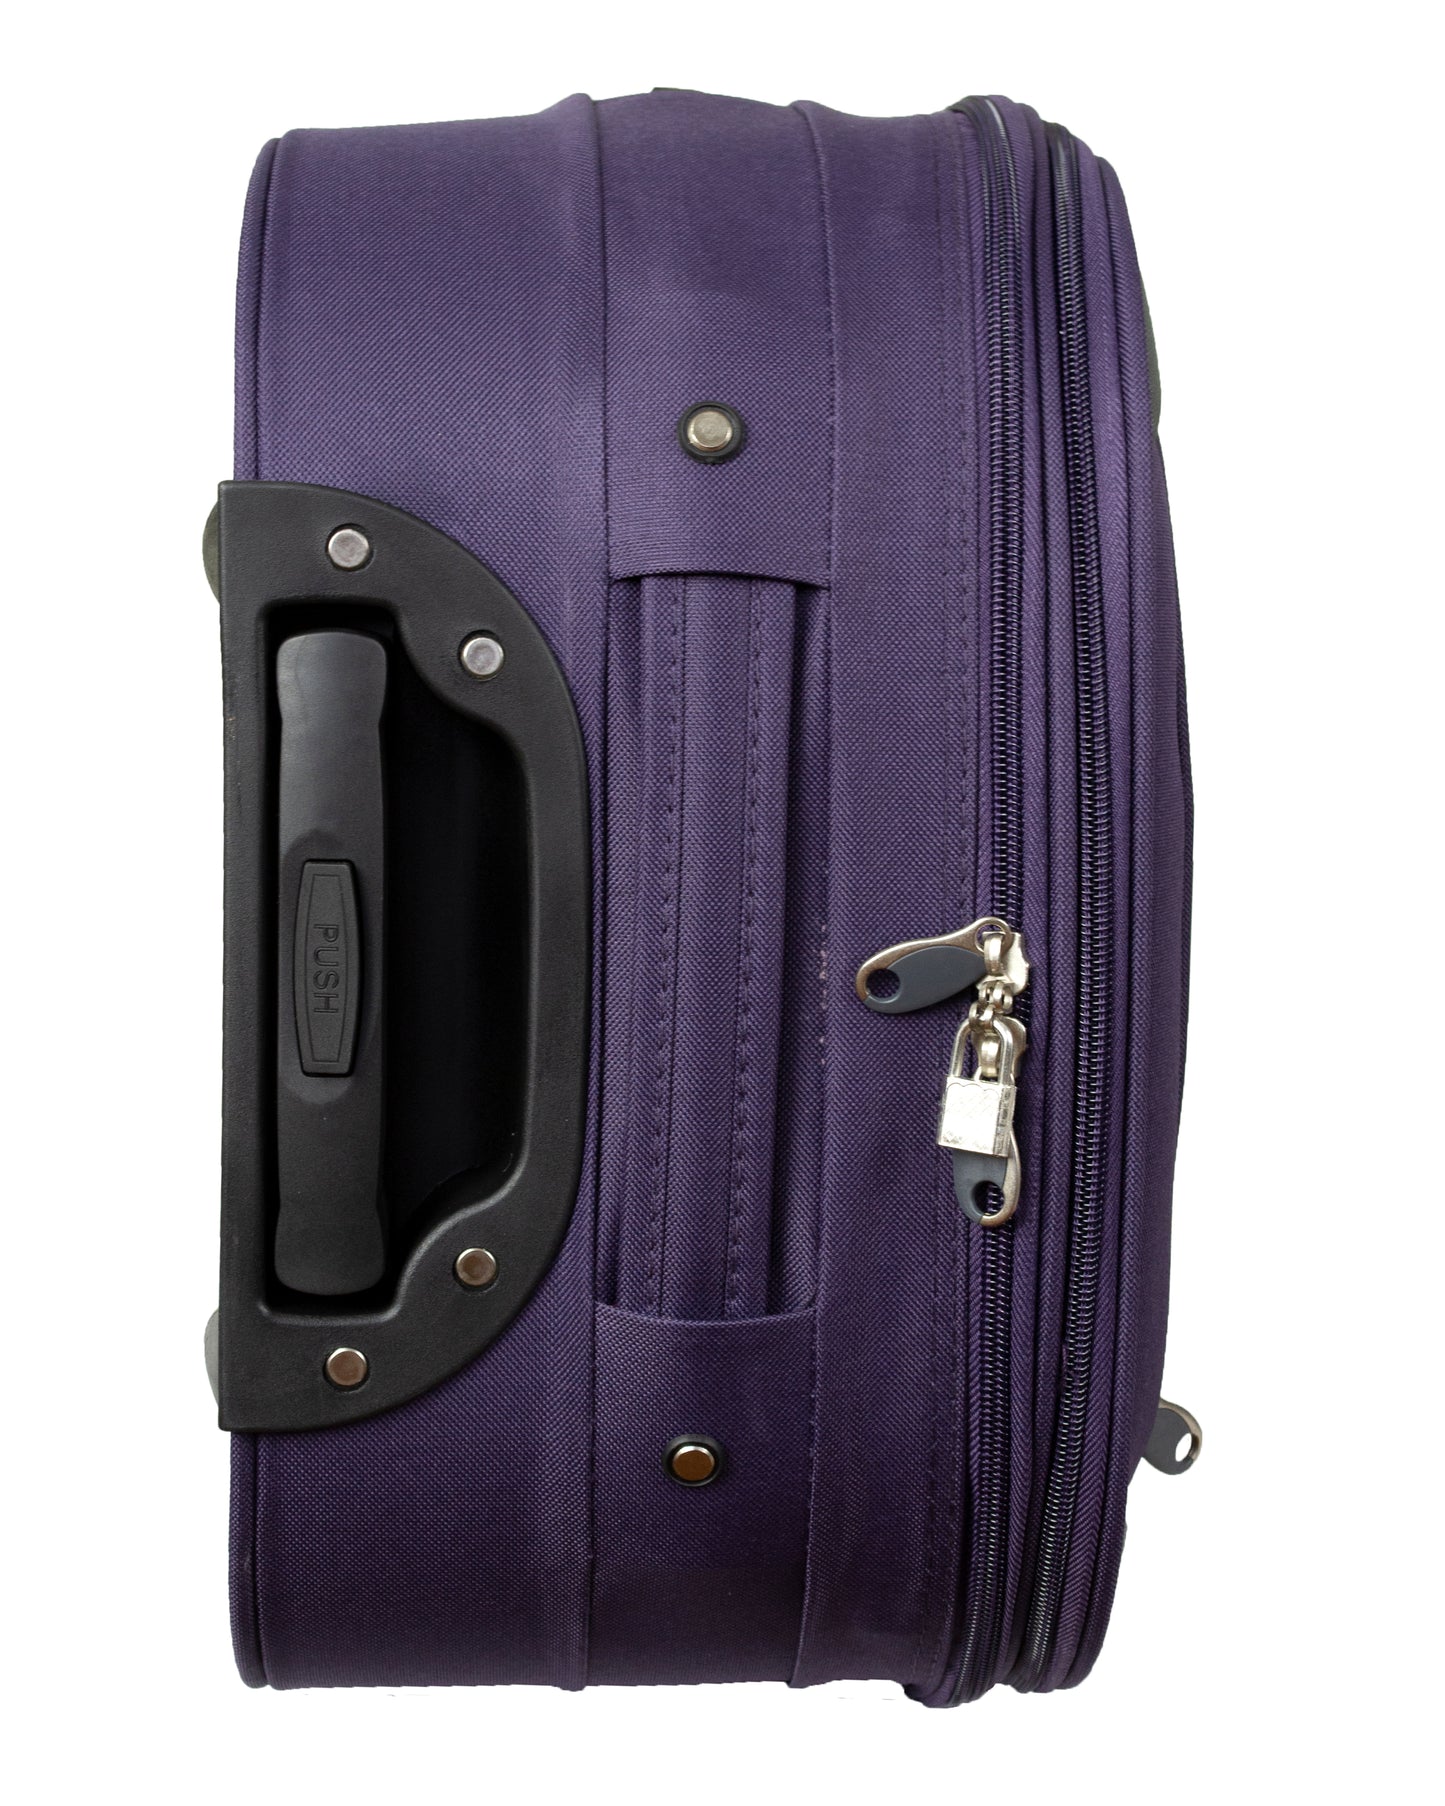 2 Wheels Soft Case Luggage Purple